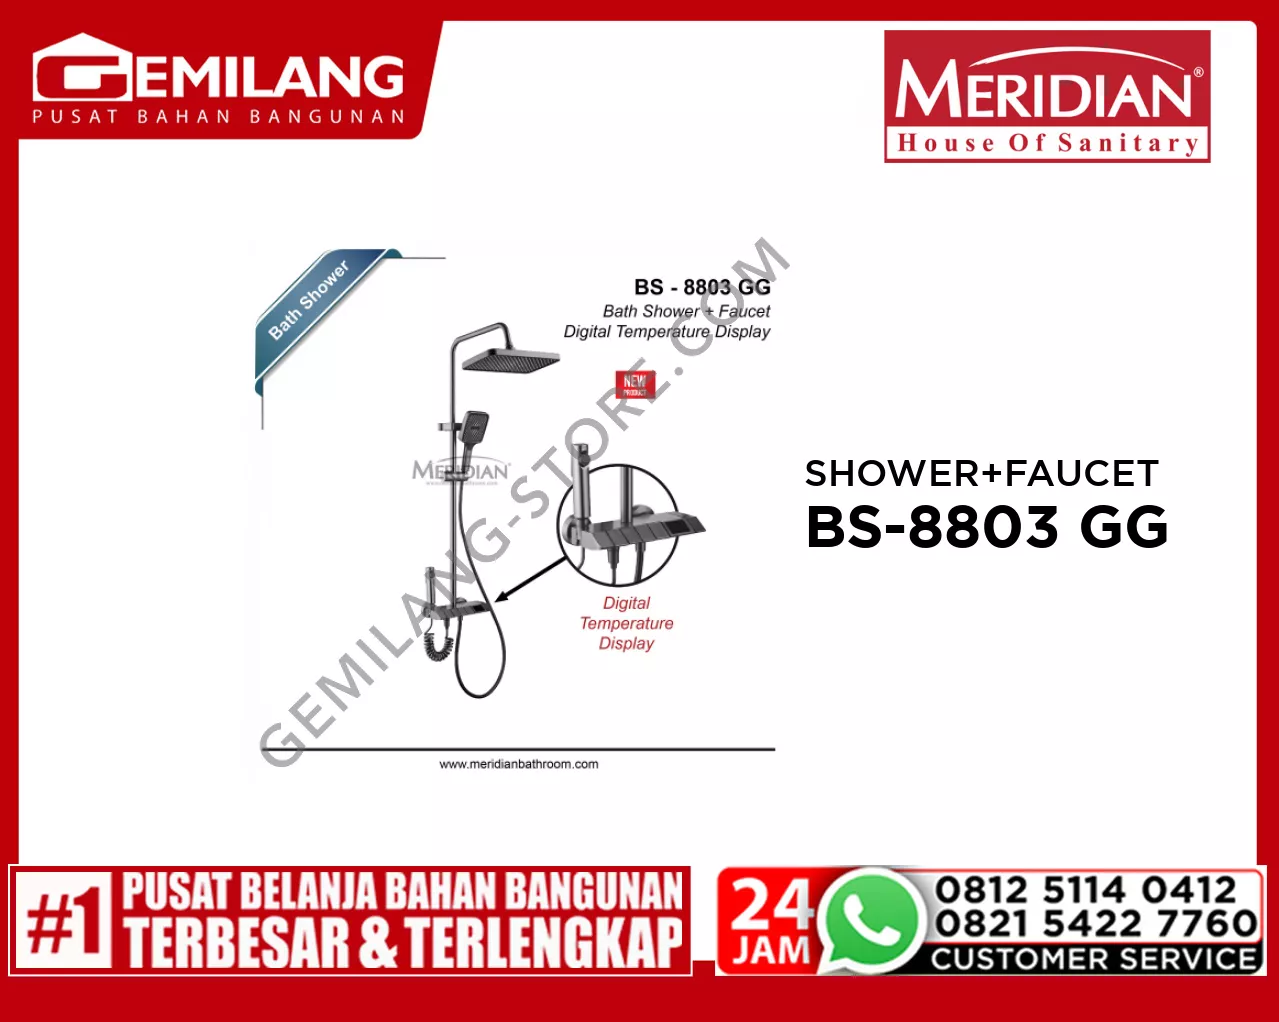 MERIDIAN BATH SHOWER + FAUCET BS-8803 GG